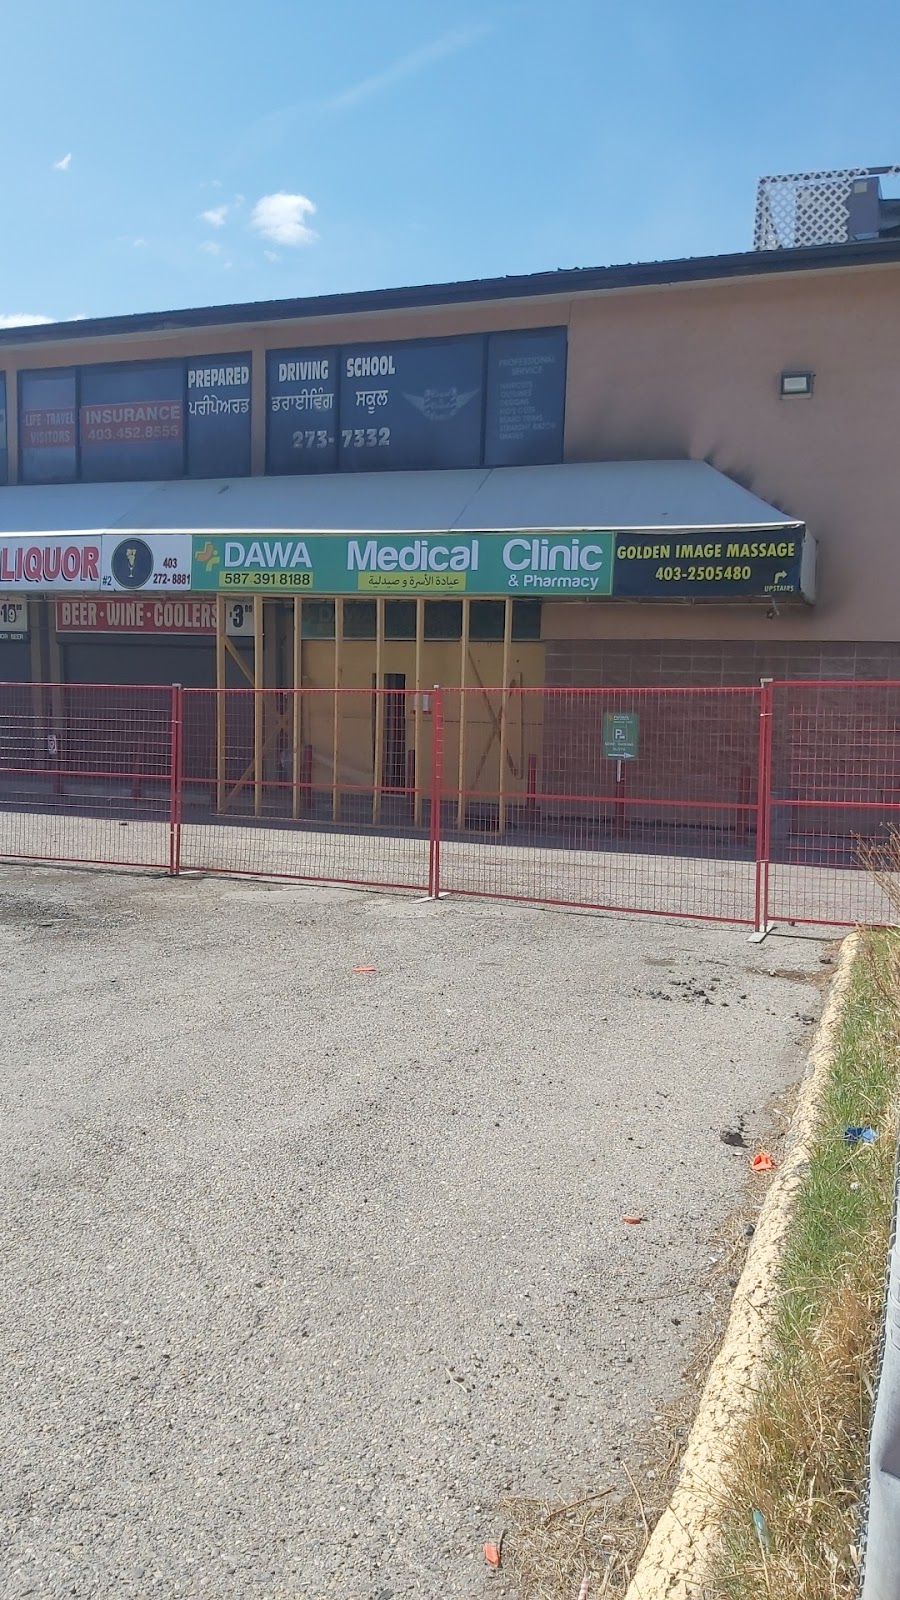 DAWA Walk-in, Family Medical Clinic & Pharmacy | health | 5268 Marlborough Dr NE #3, Calgary, AB T2A 5L5, Canada | 5873918188 OR +1 587-391-8188